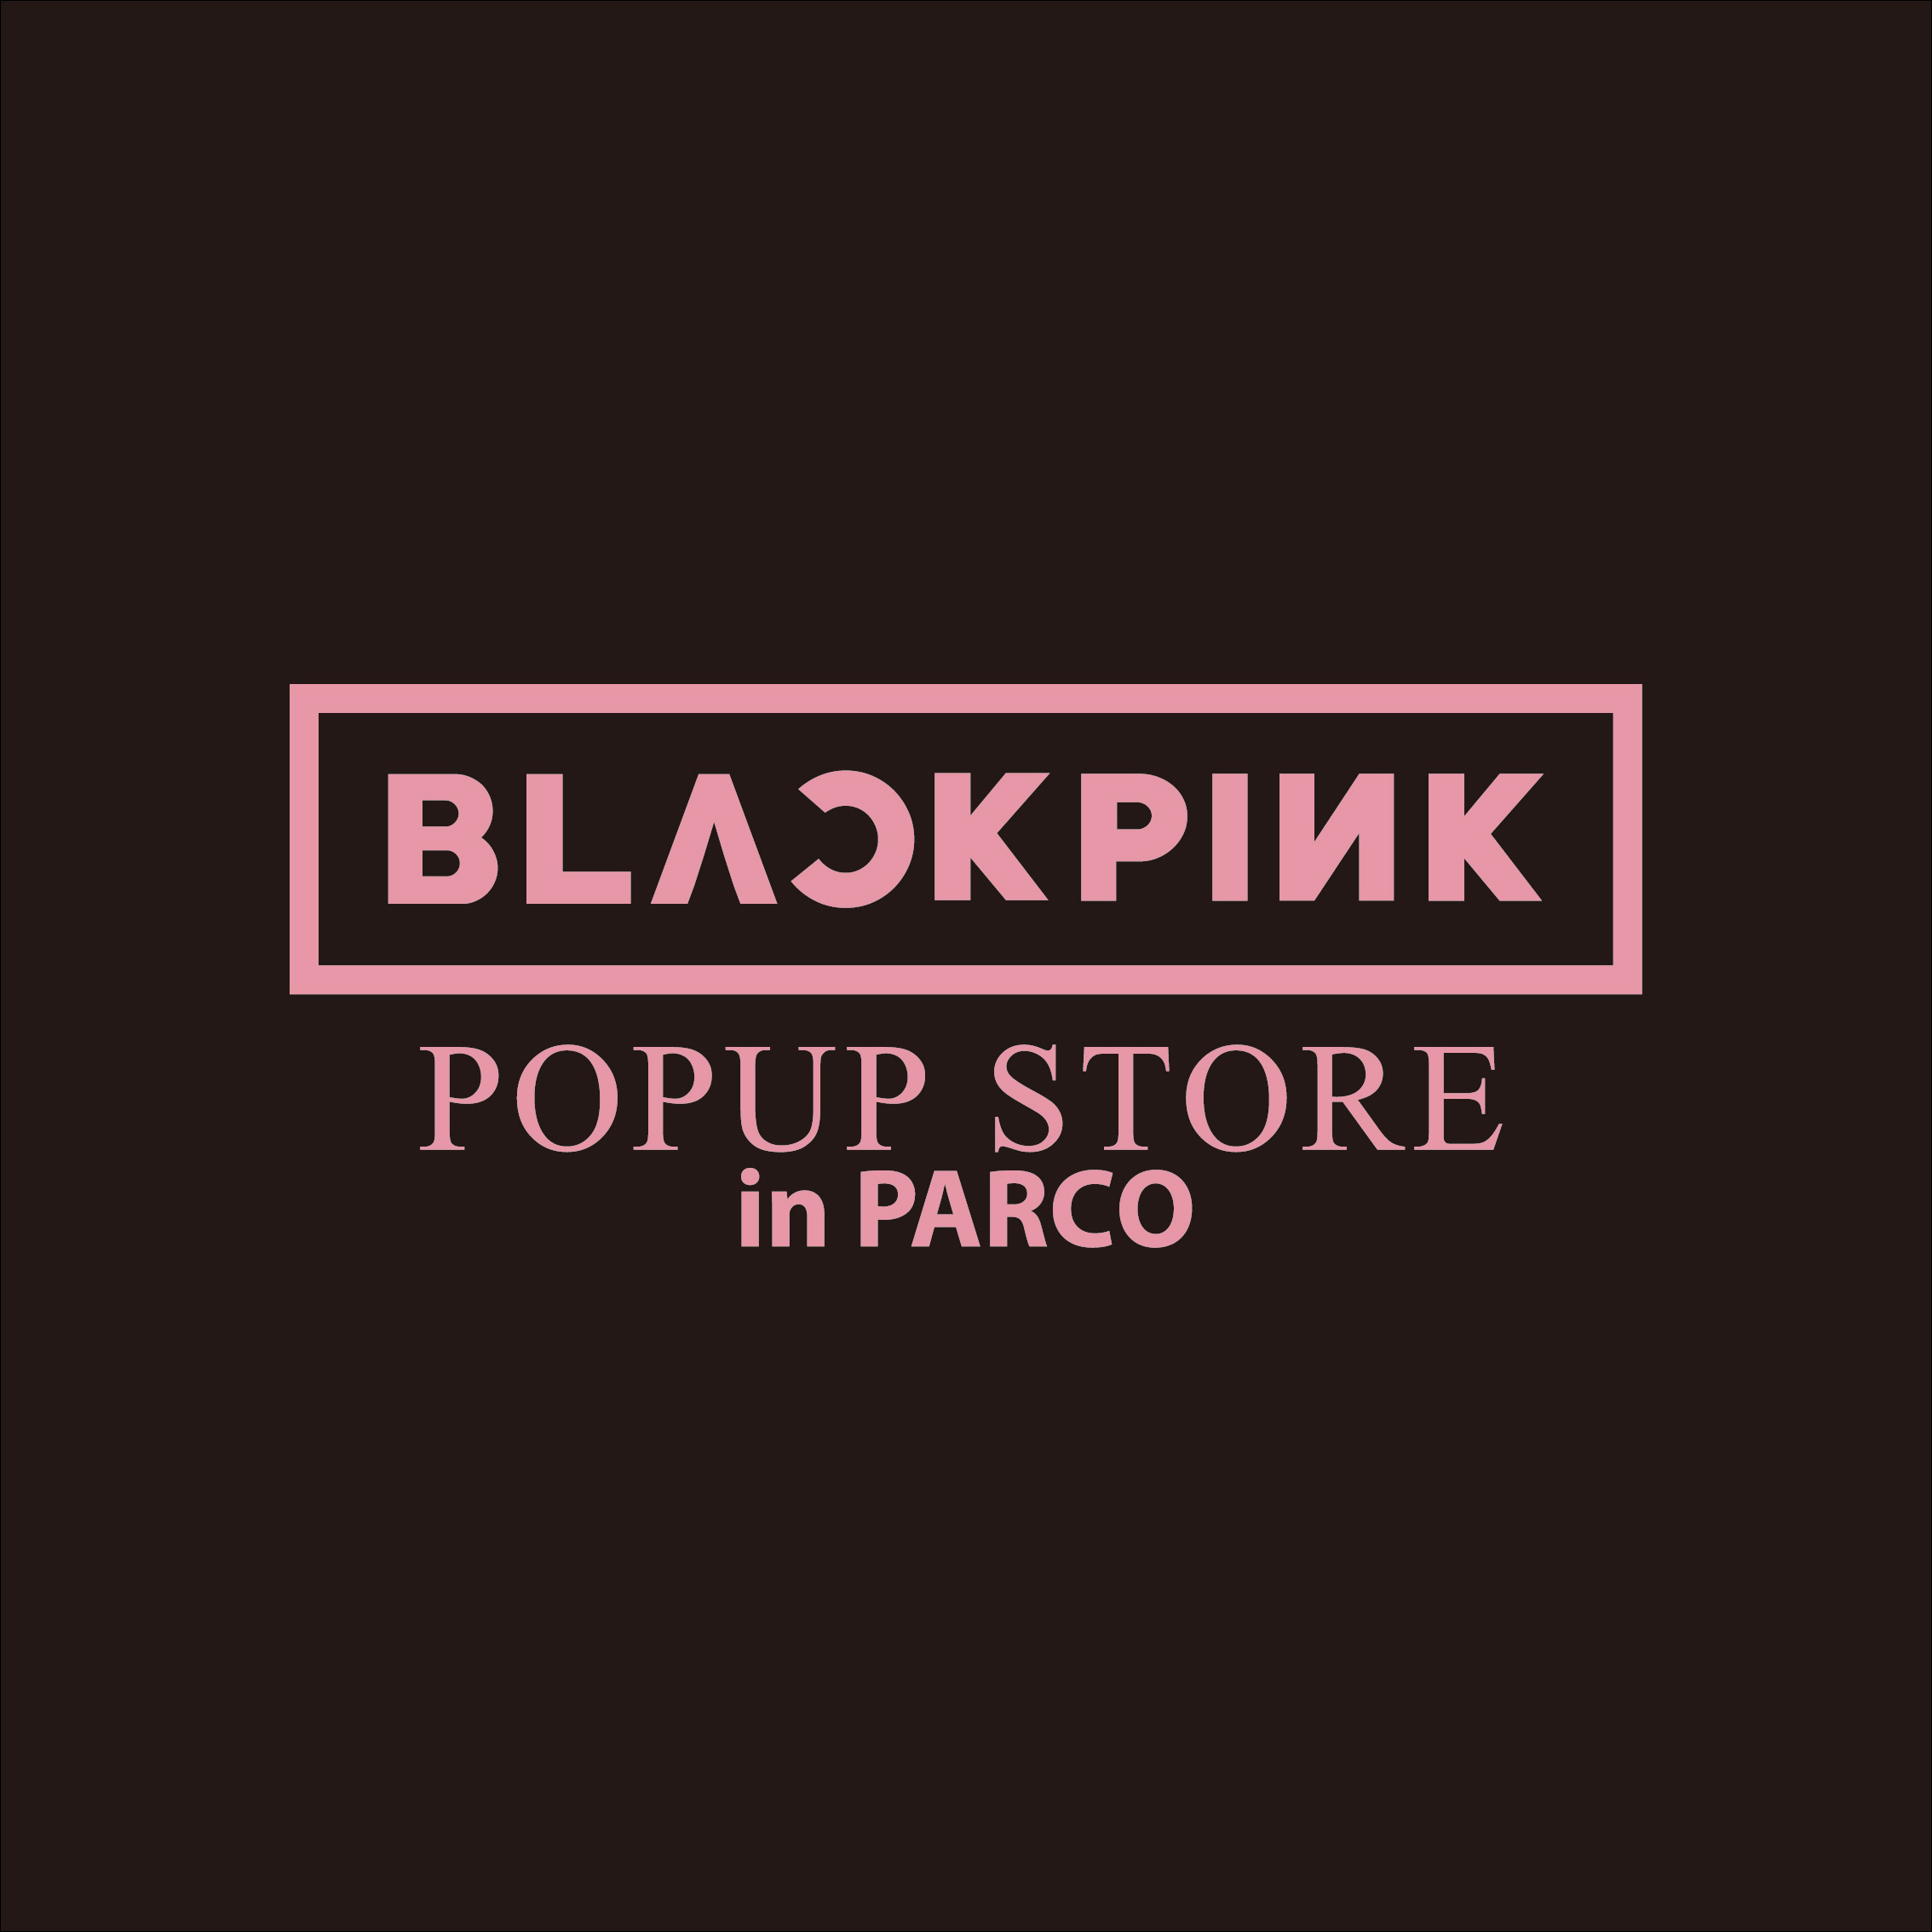 【池袋会場】BLACKPINK POPUP STORE in PARCO